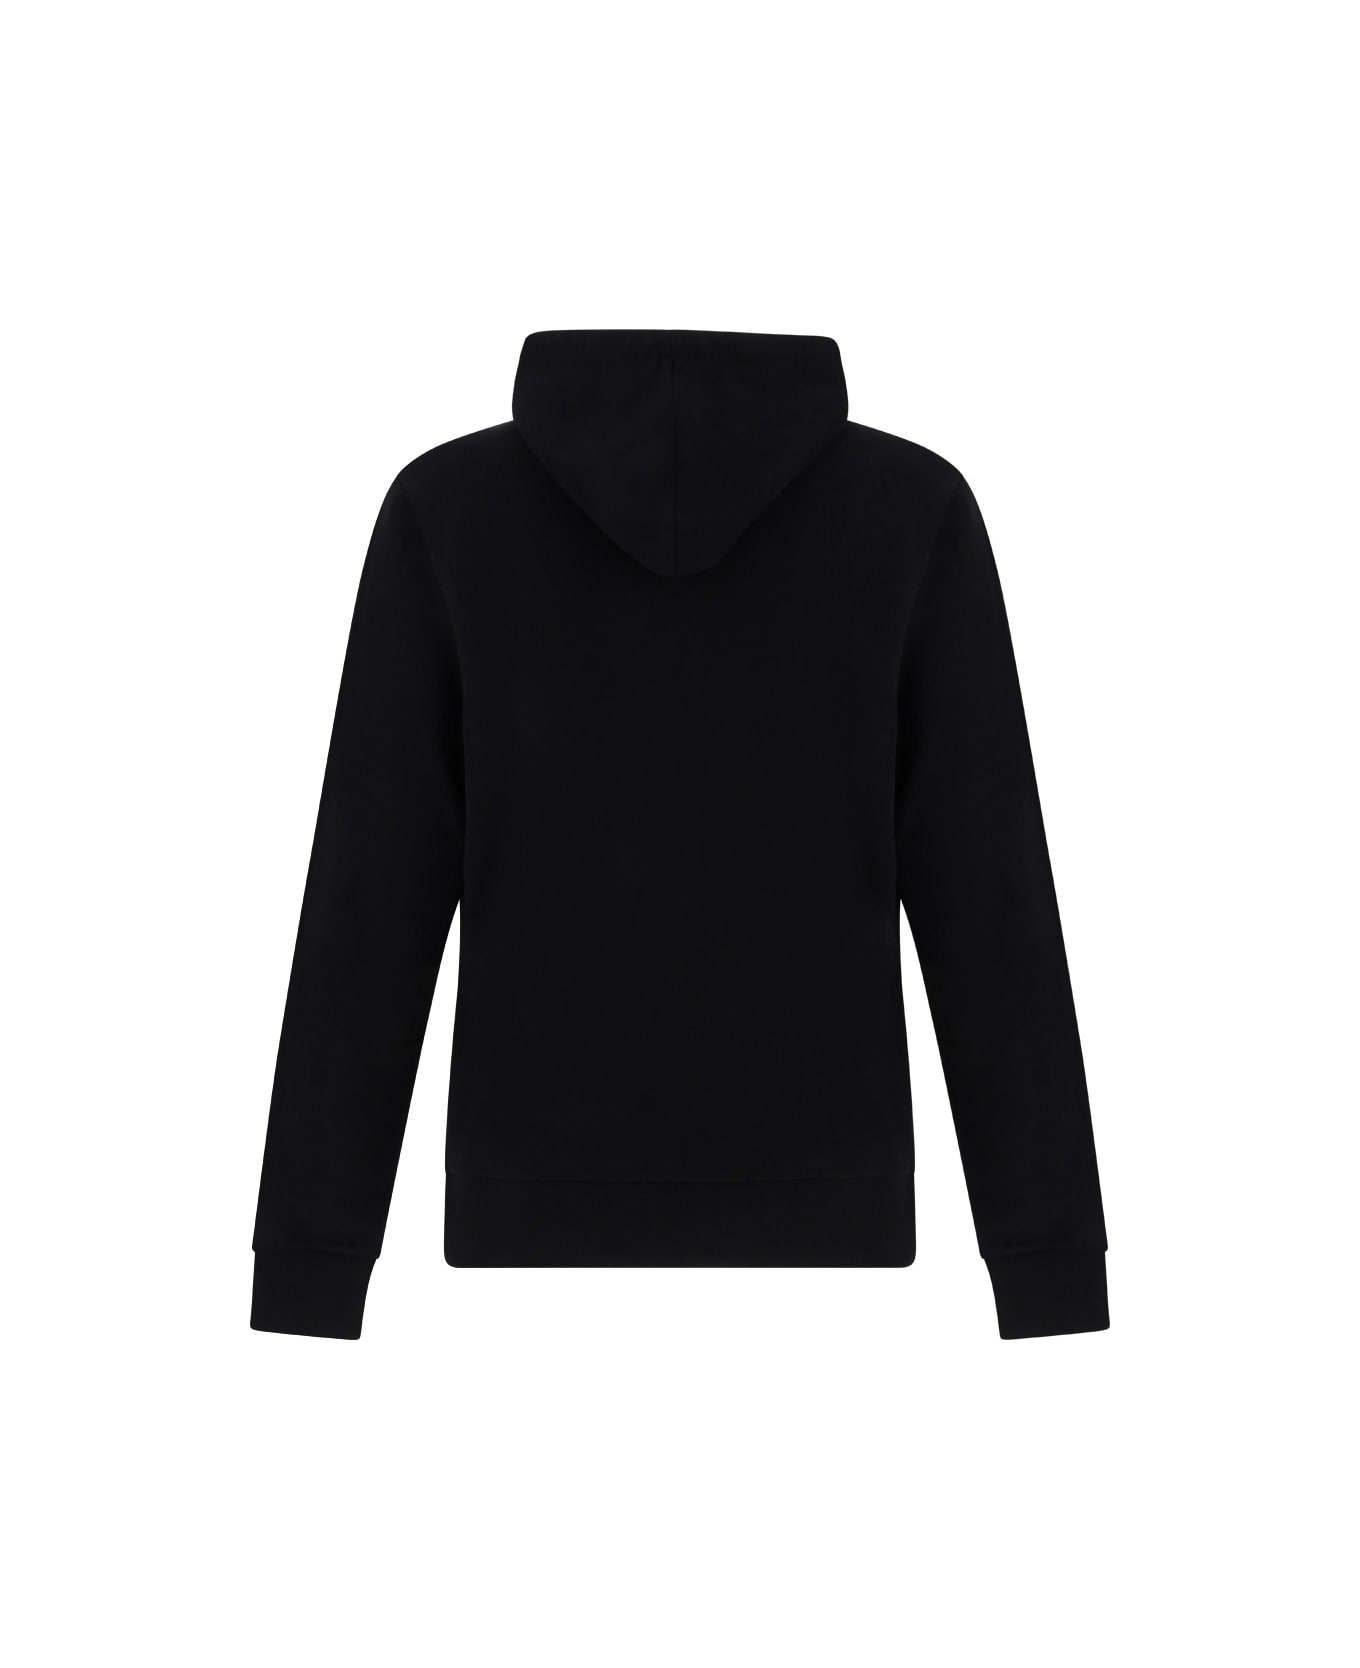 Balmain Cotton Hoodie Sweatshirt - Noir/multi-gris